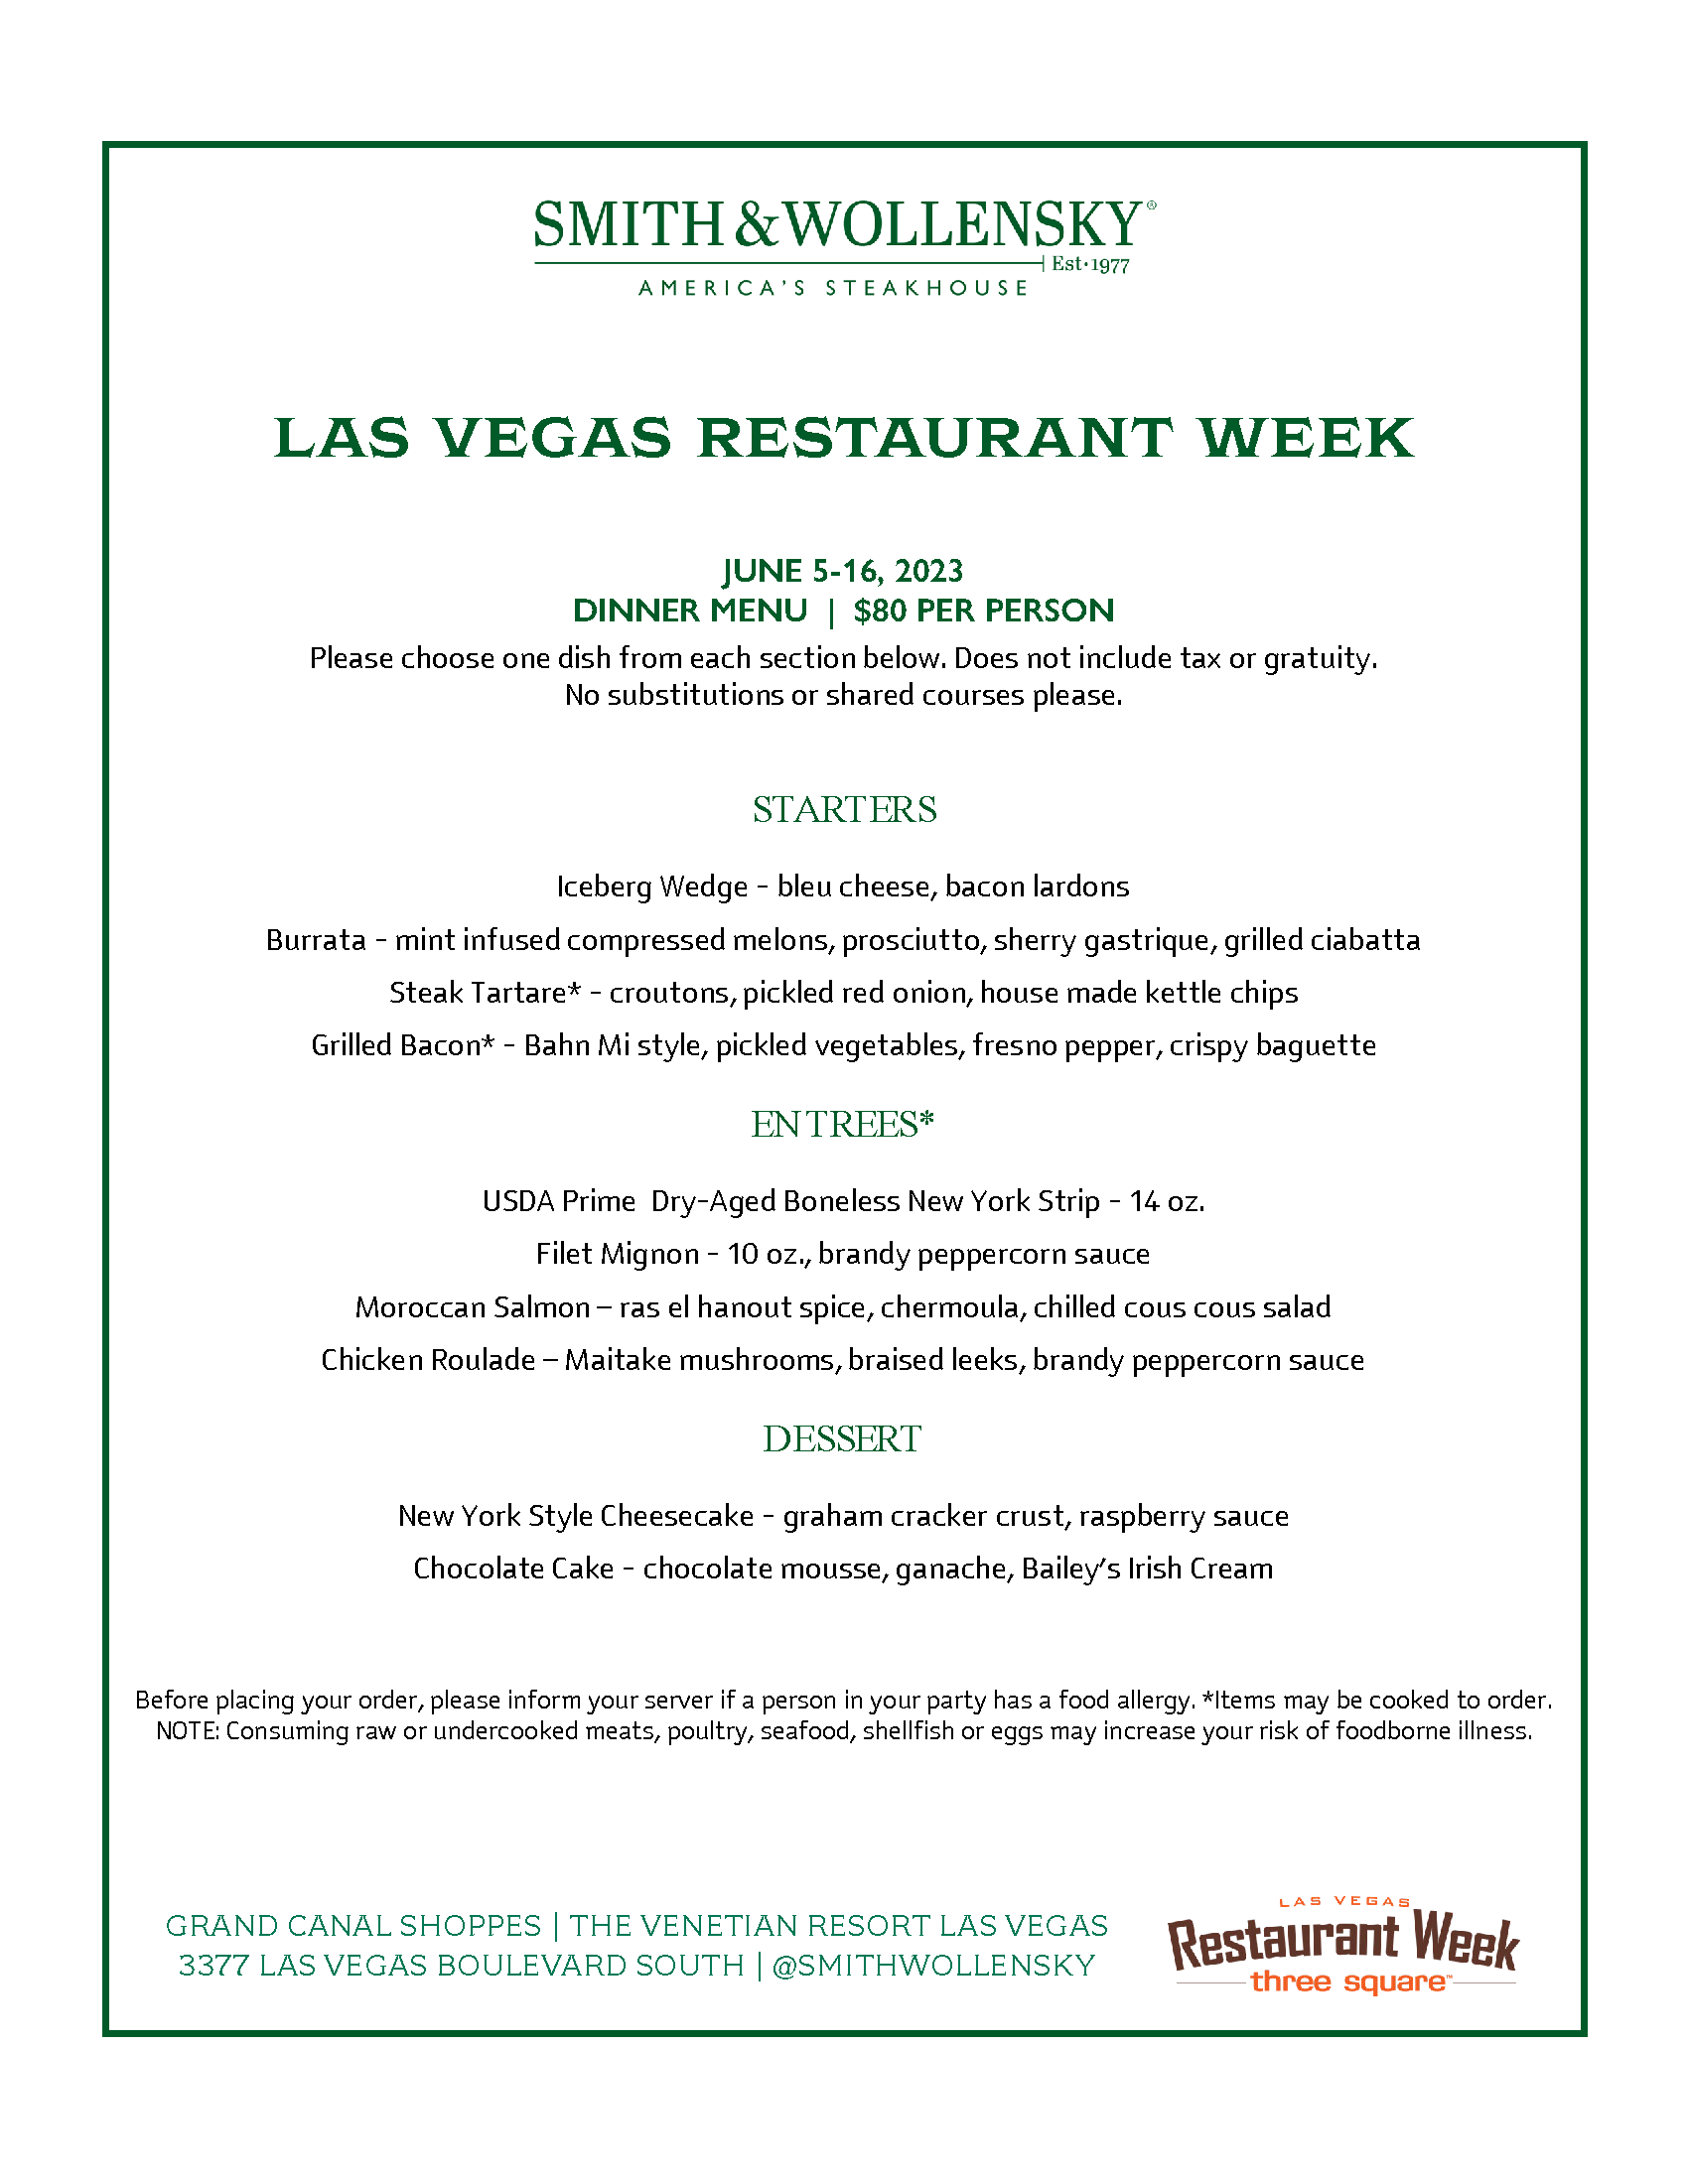 Las Vegas Restaurant Week from Smith & Wollensky